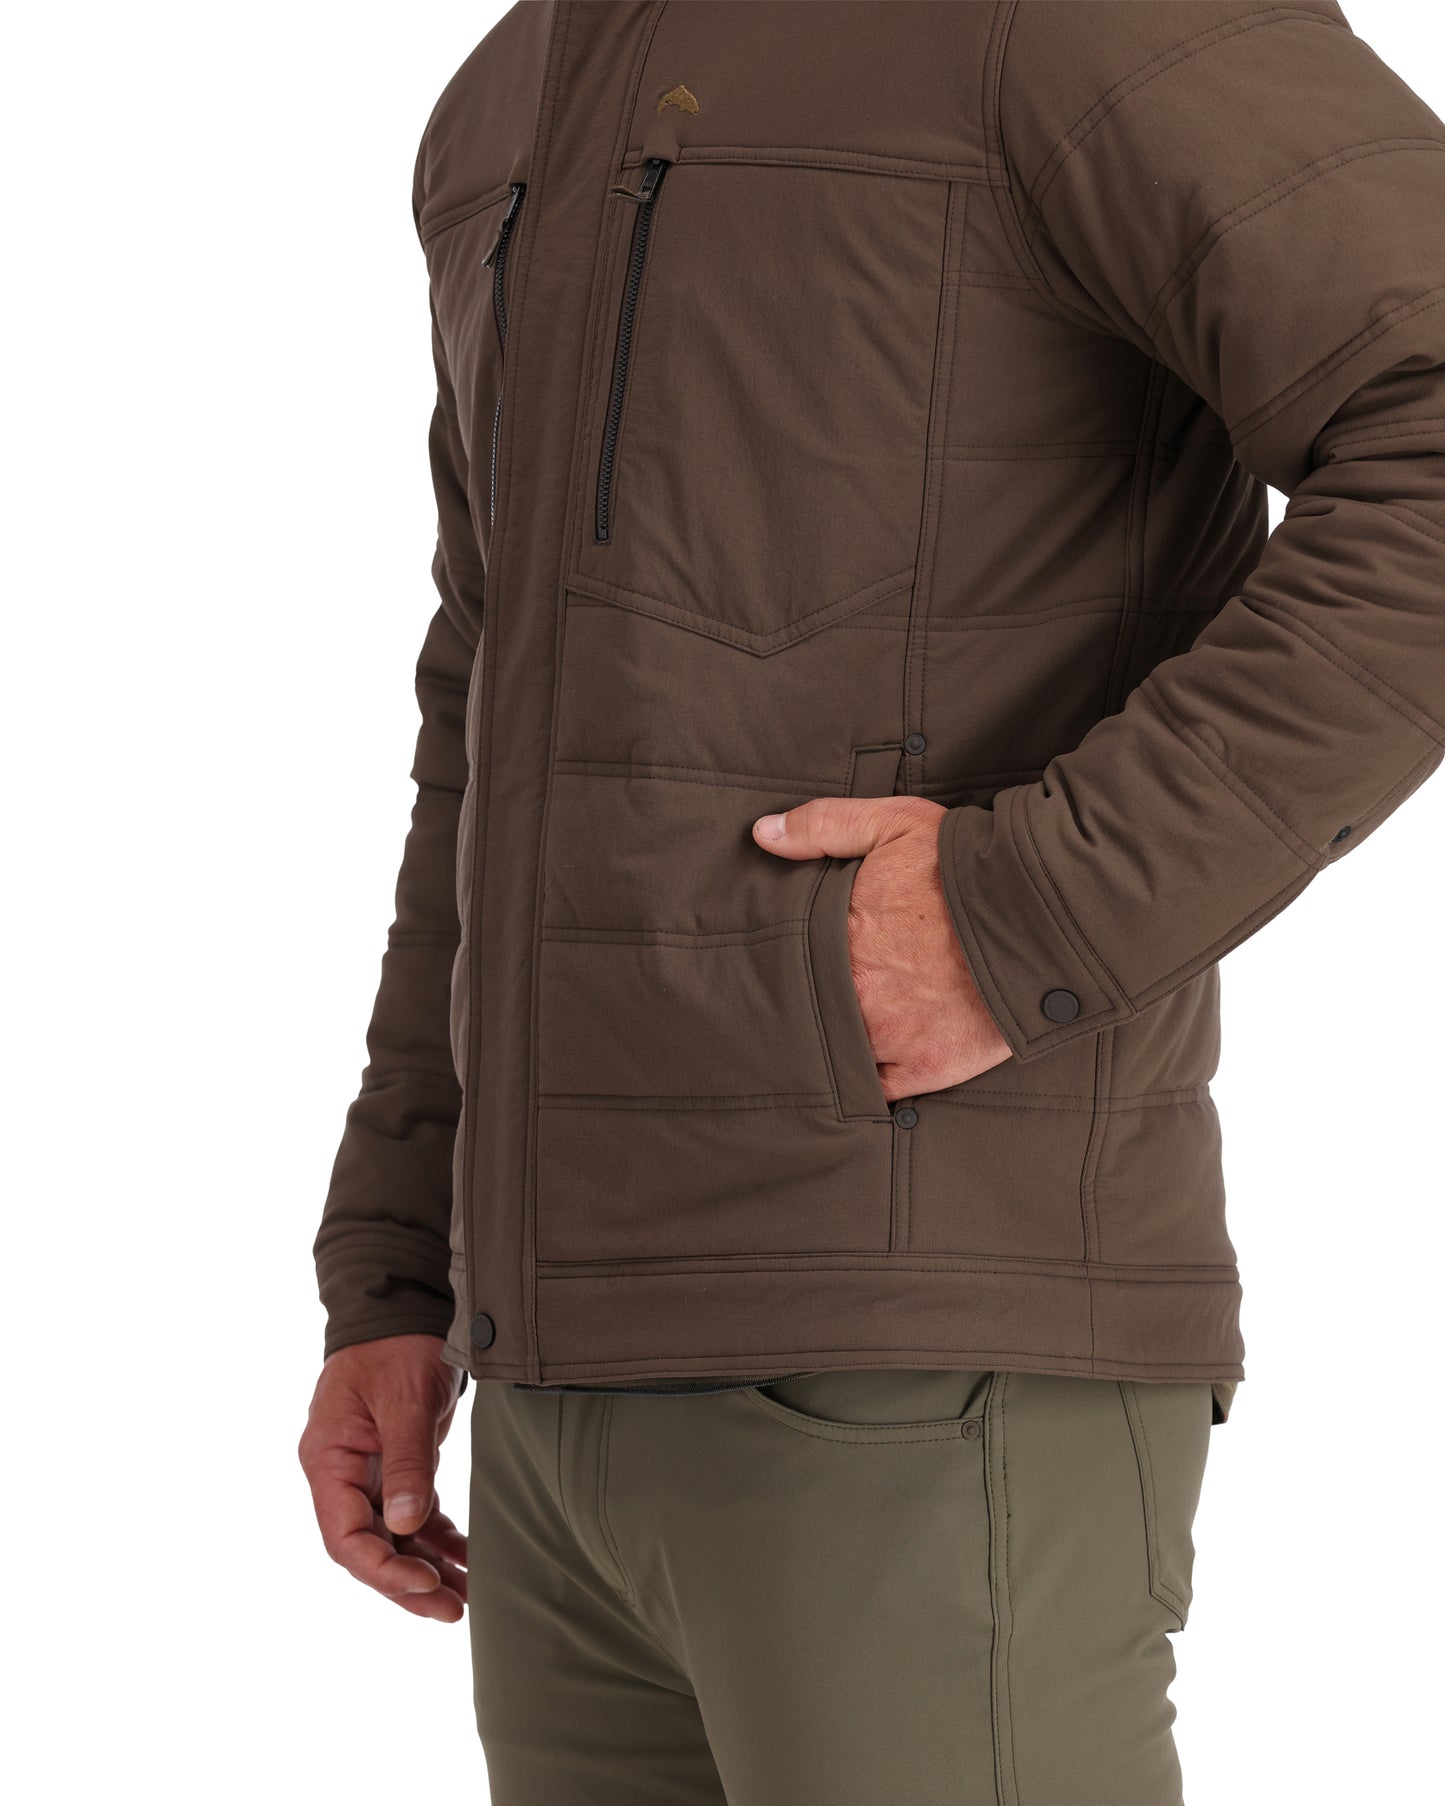 13599-216-cardwell-hooded-jacket-model